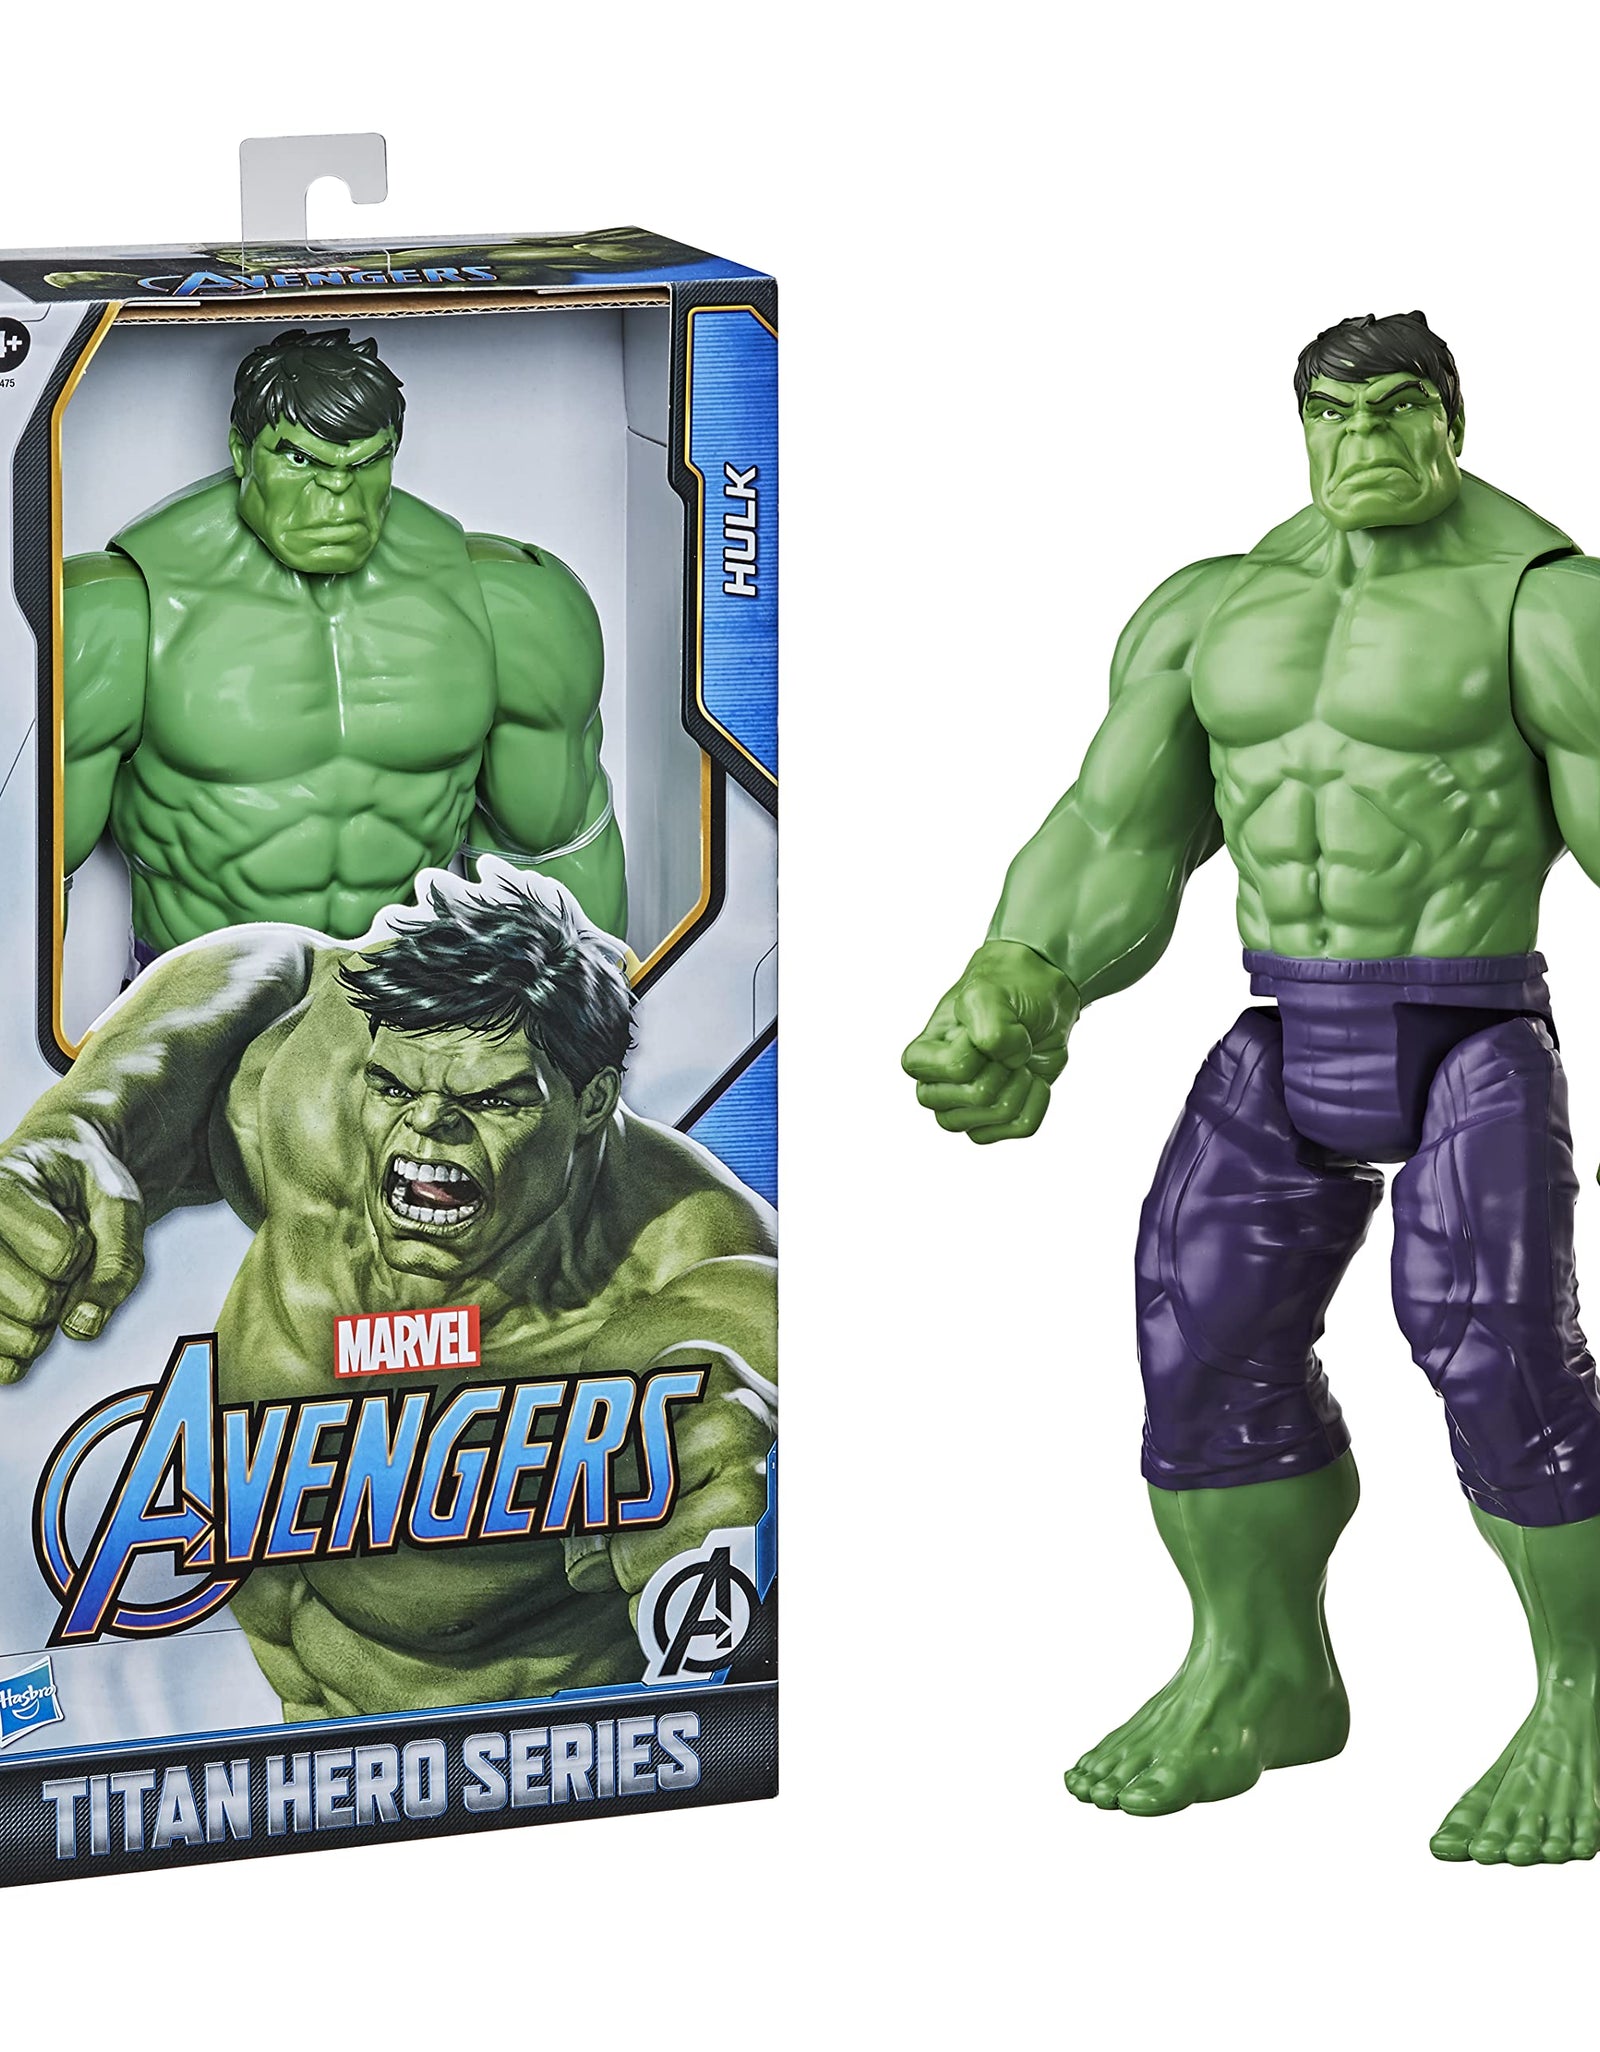 Marvel Avengers Titan Hero Series Blast Gear Deluxe Hulk Action Figure, 30-cm Toy, Inspired byMarvel Comics, for Children Aged 4 and Up